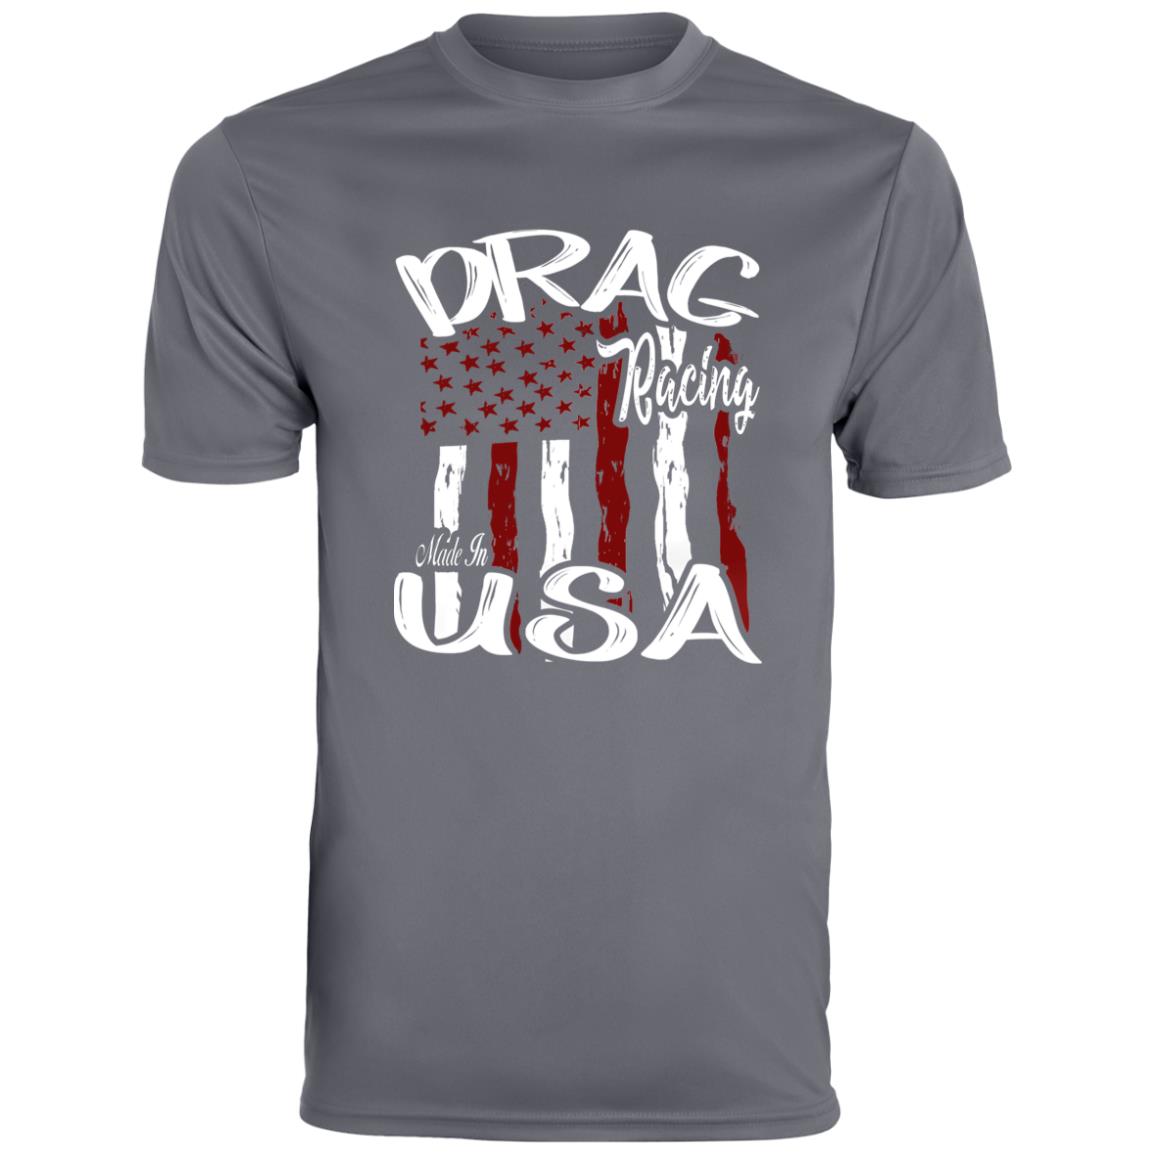 Drag Racing Made In USA Men's Moisture-Wicking Tee